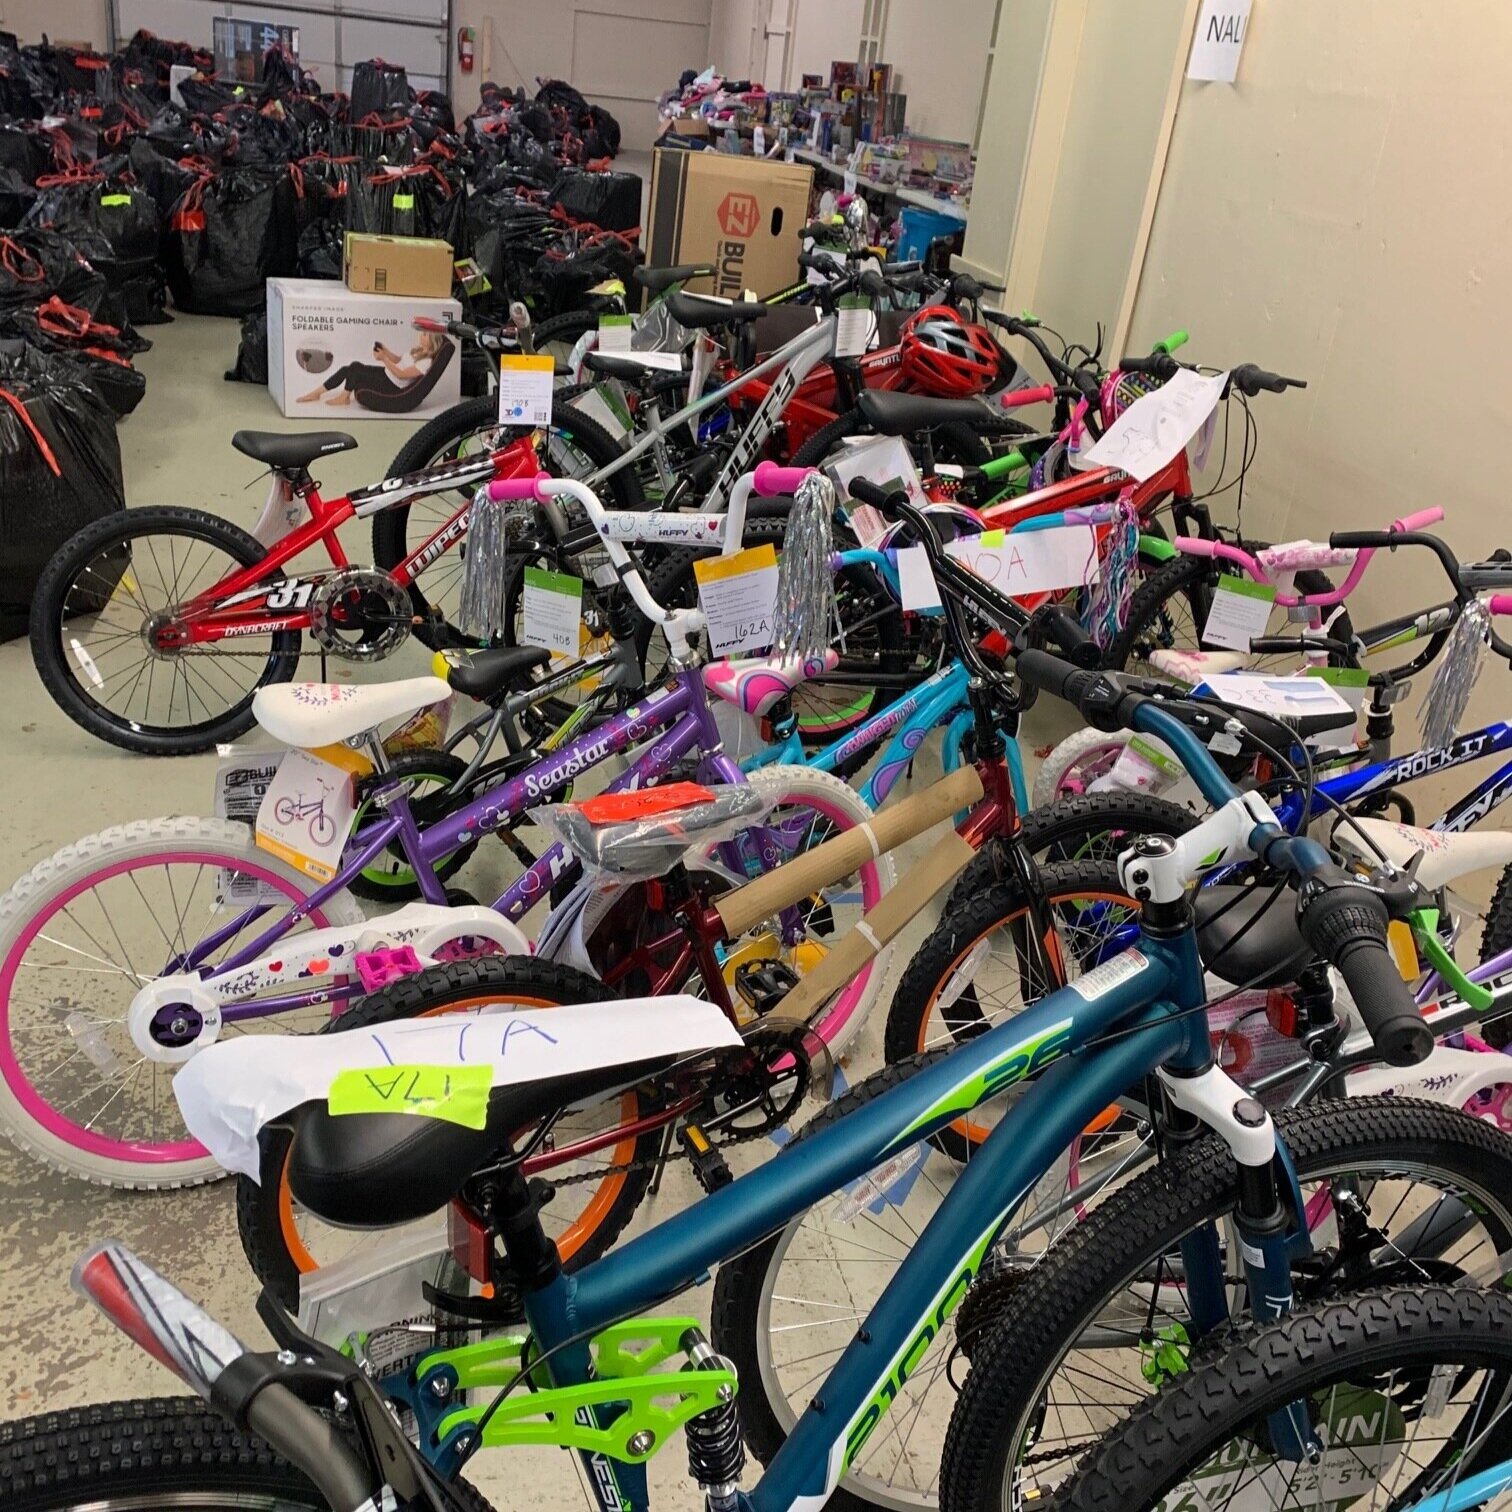  Many kids will receive brand new bikes this year 